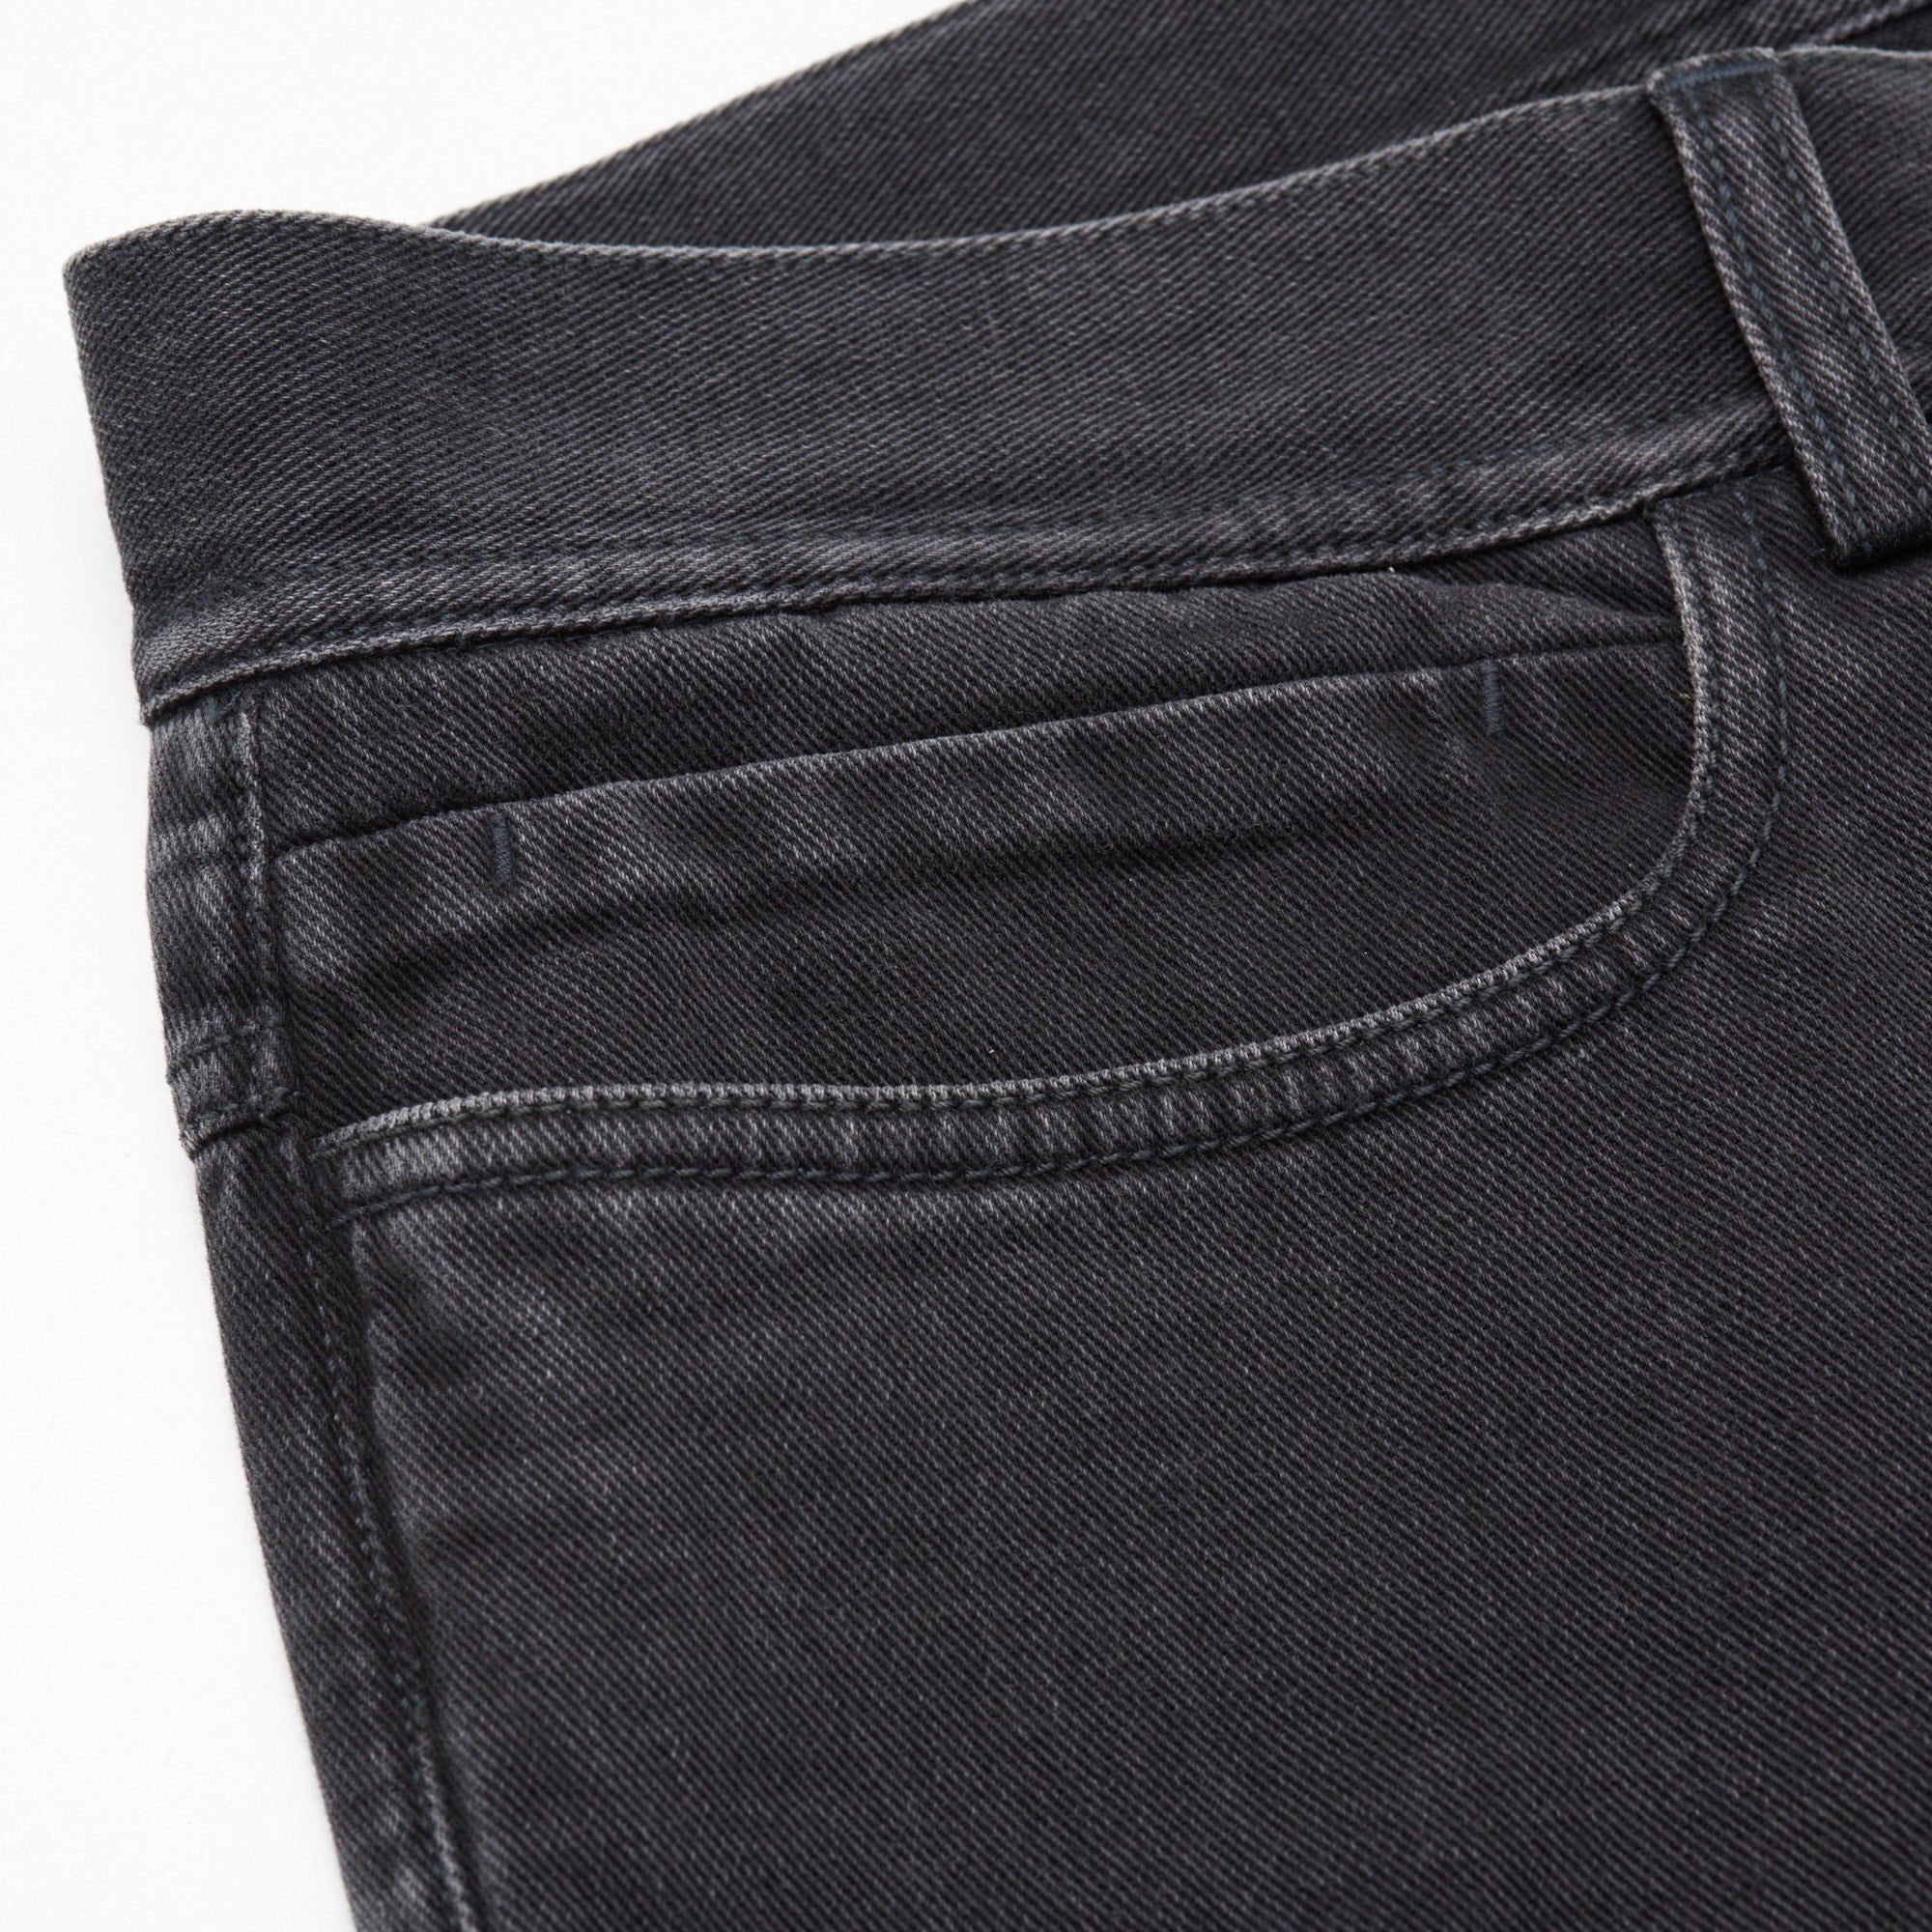 BERLUTI Paris Black Denim Narrow Slim Fit Jeans Pants EU 52 US 36 BERLUTI